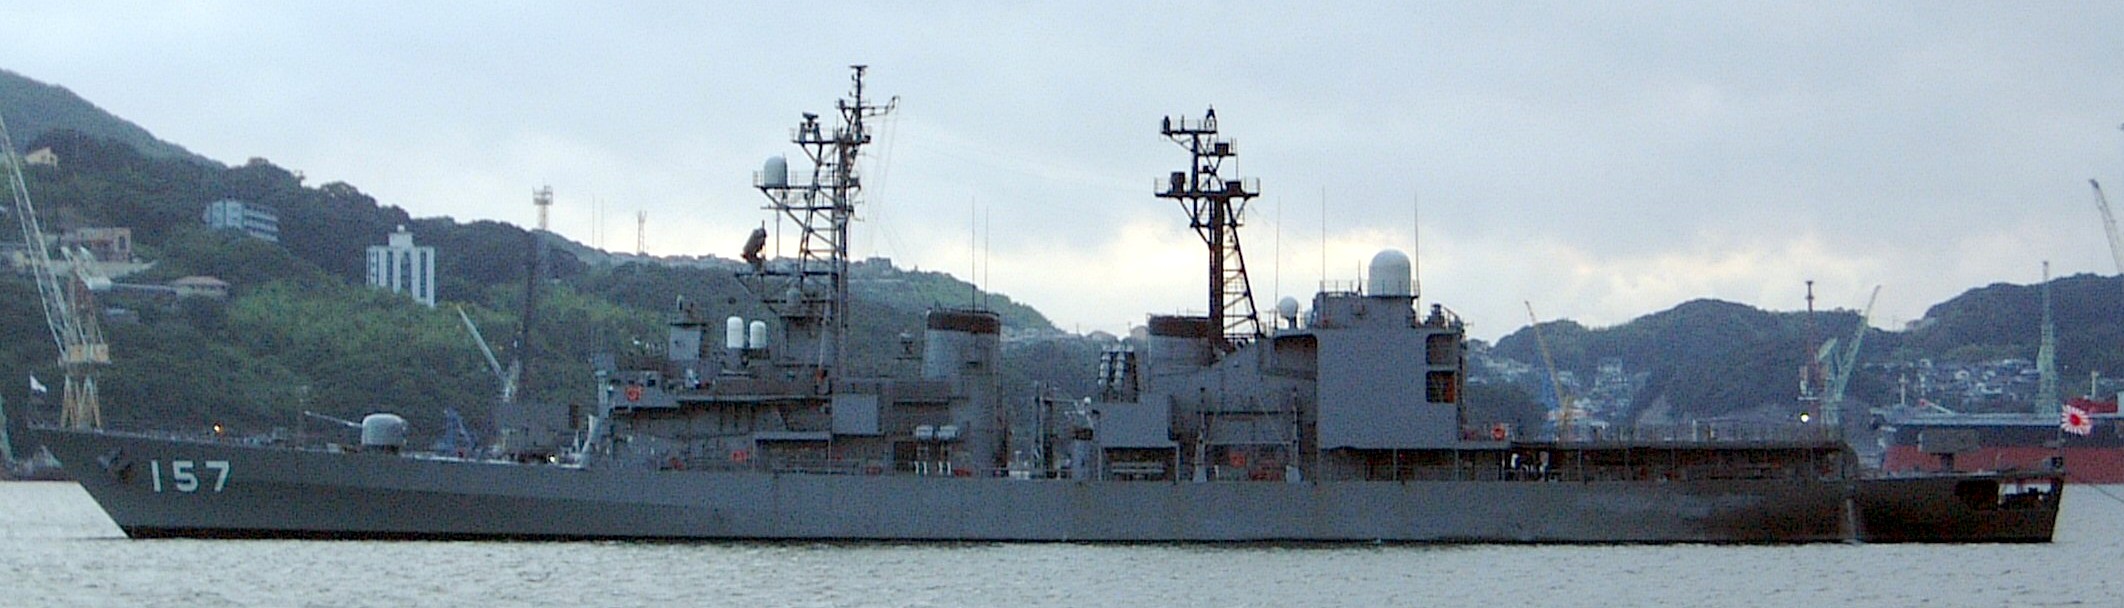 dd-157 jds sawagiri asagiri class destroyer japan maritime self defense force jmsdf 11